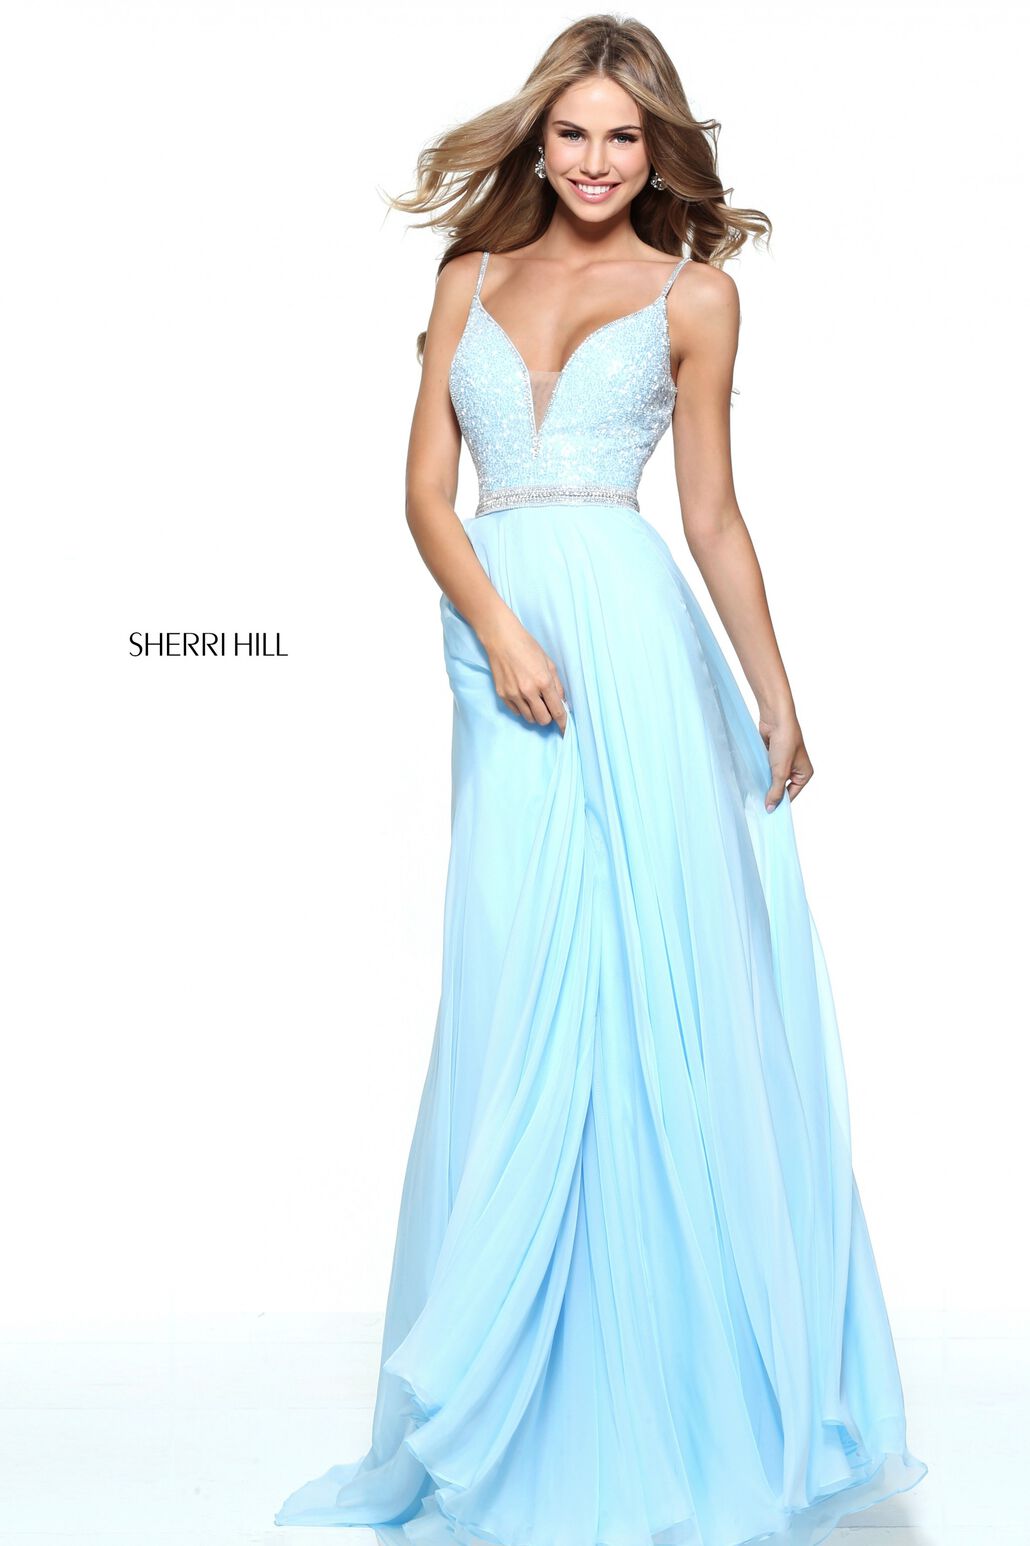 Buy dress style № 51009 designed by SherriHill